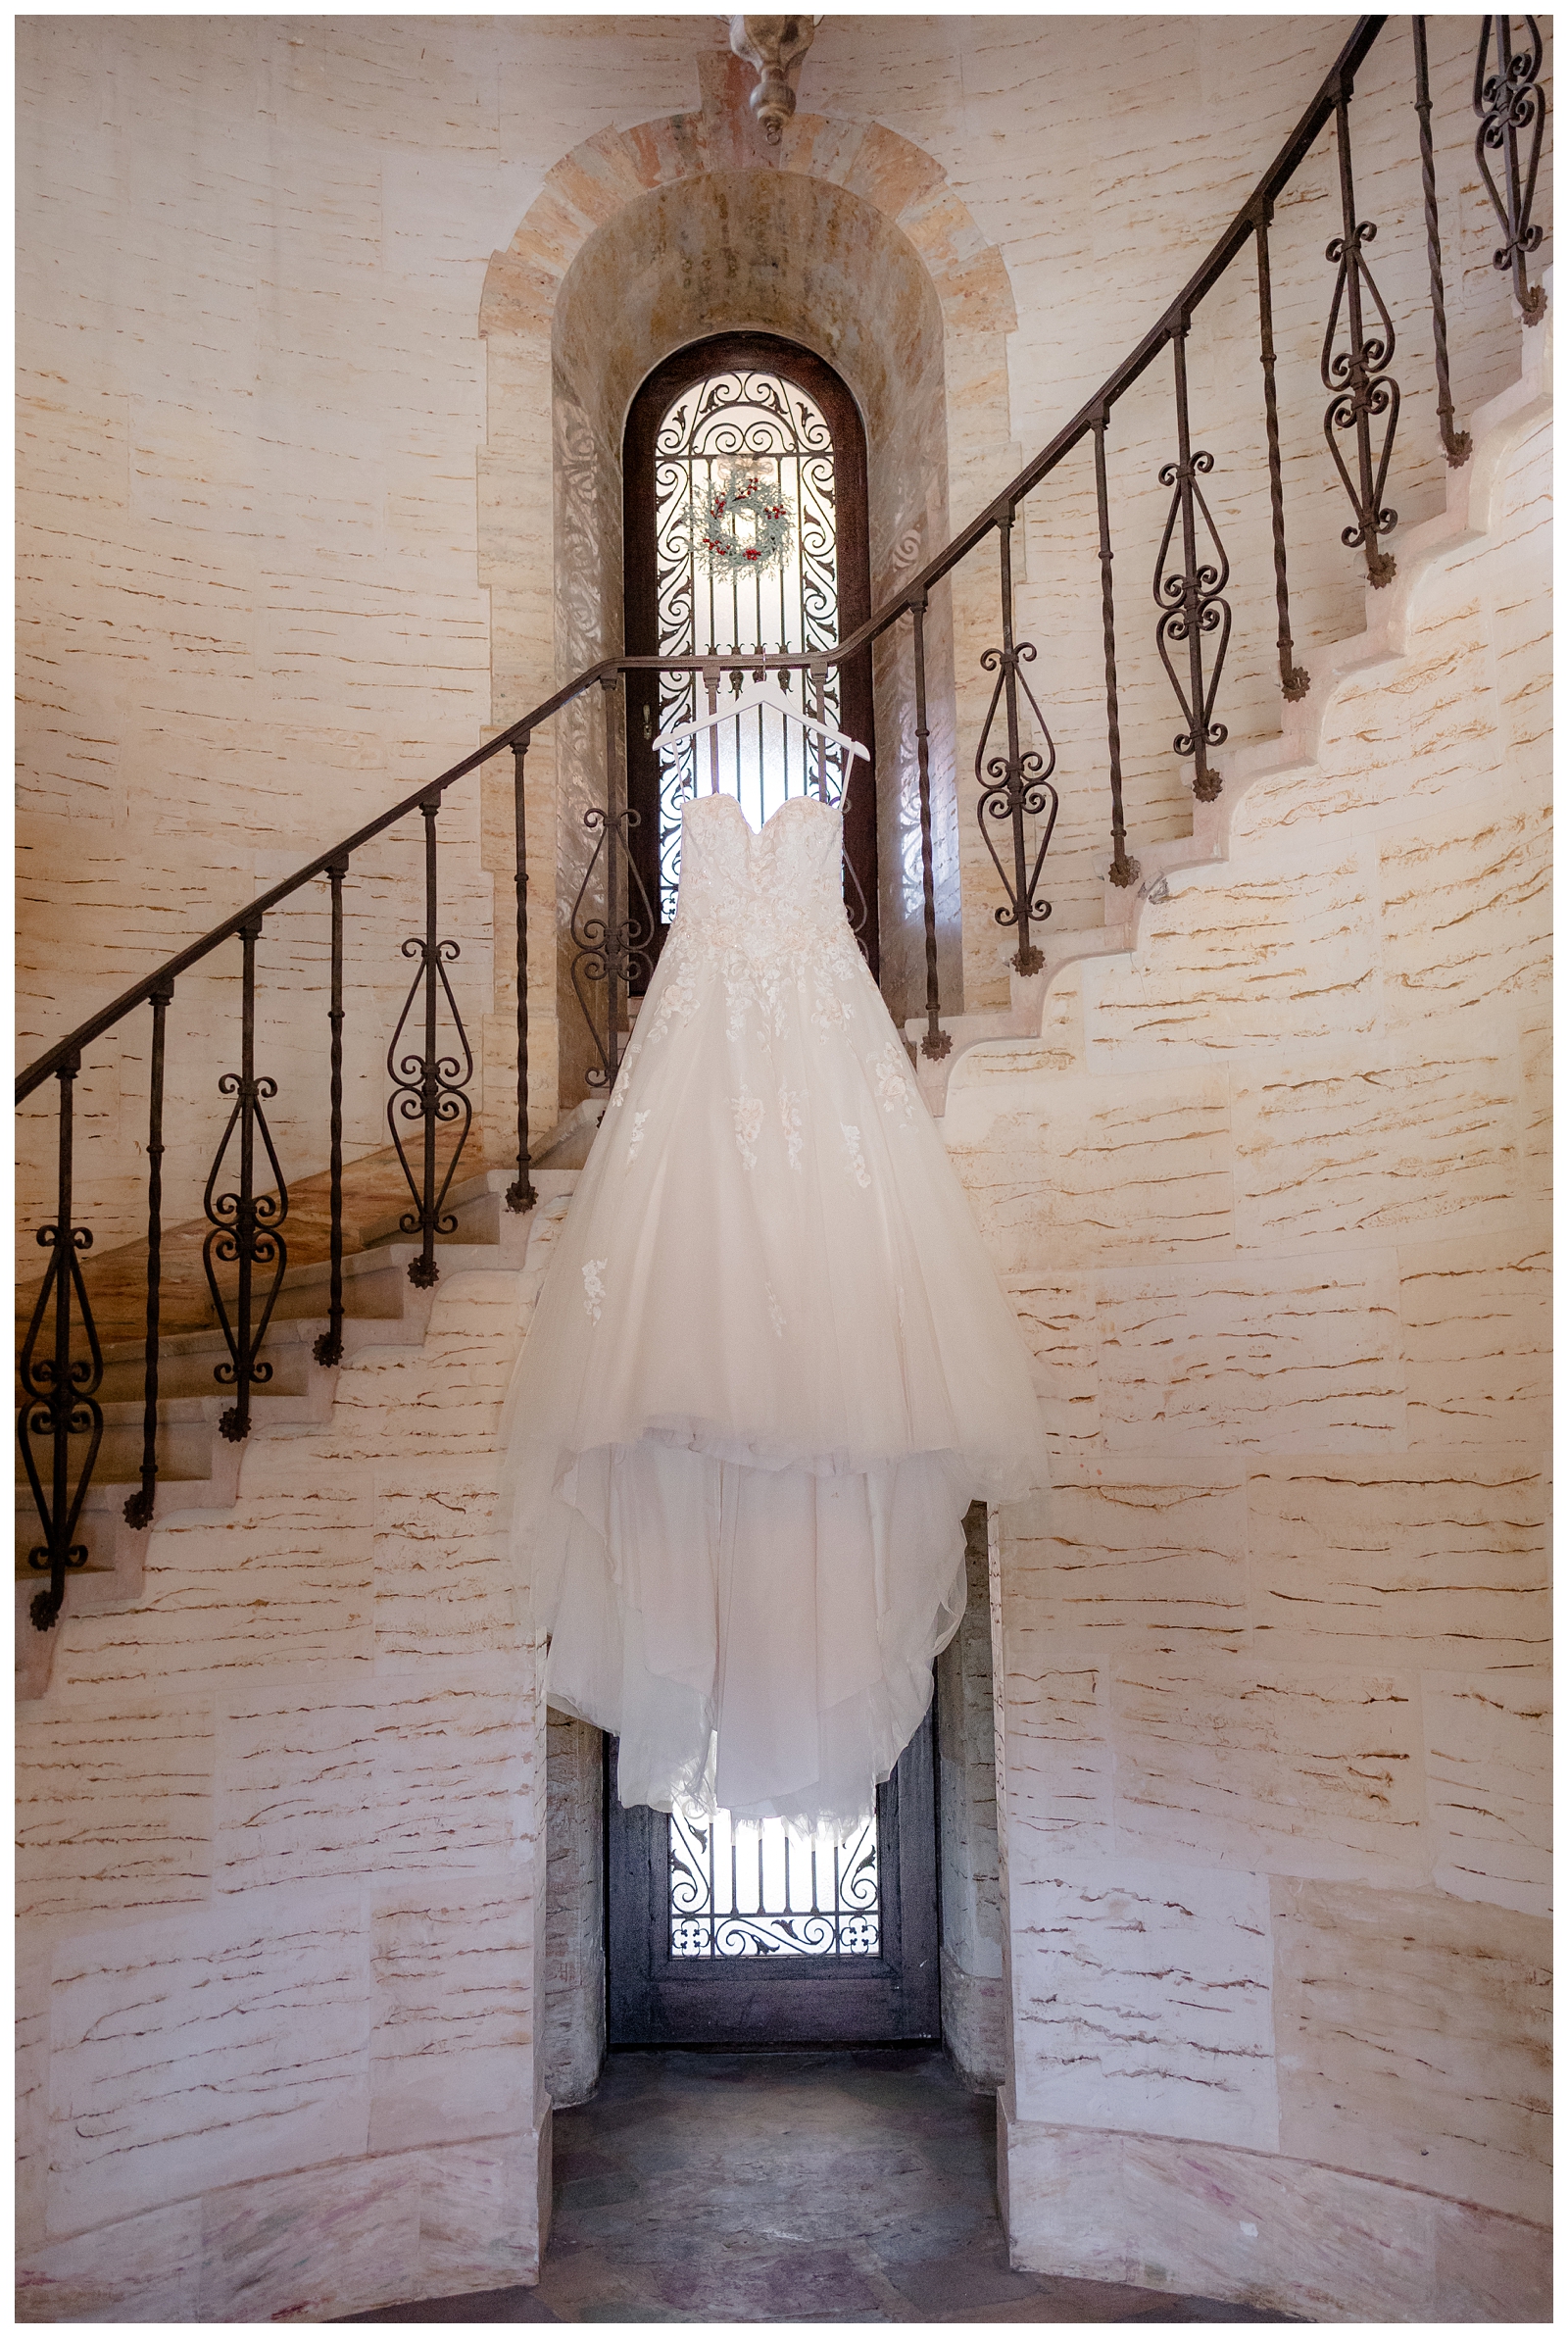 Wedding dress hanging on spiral staircase